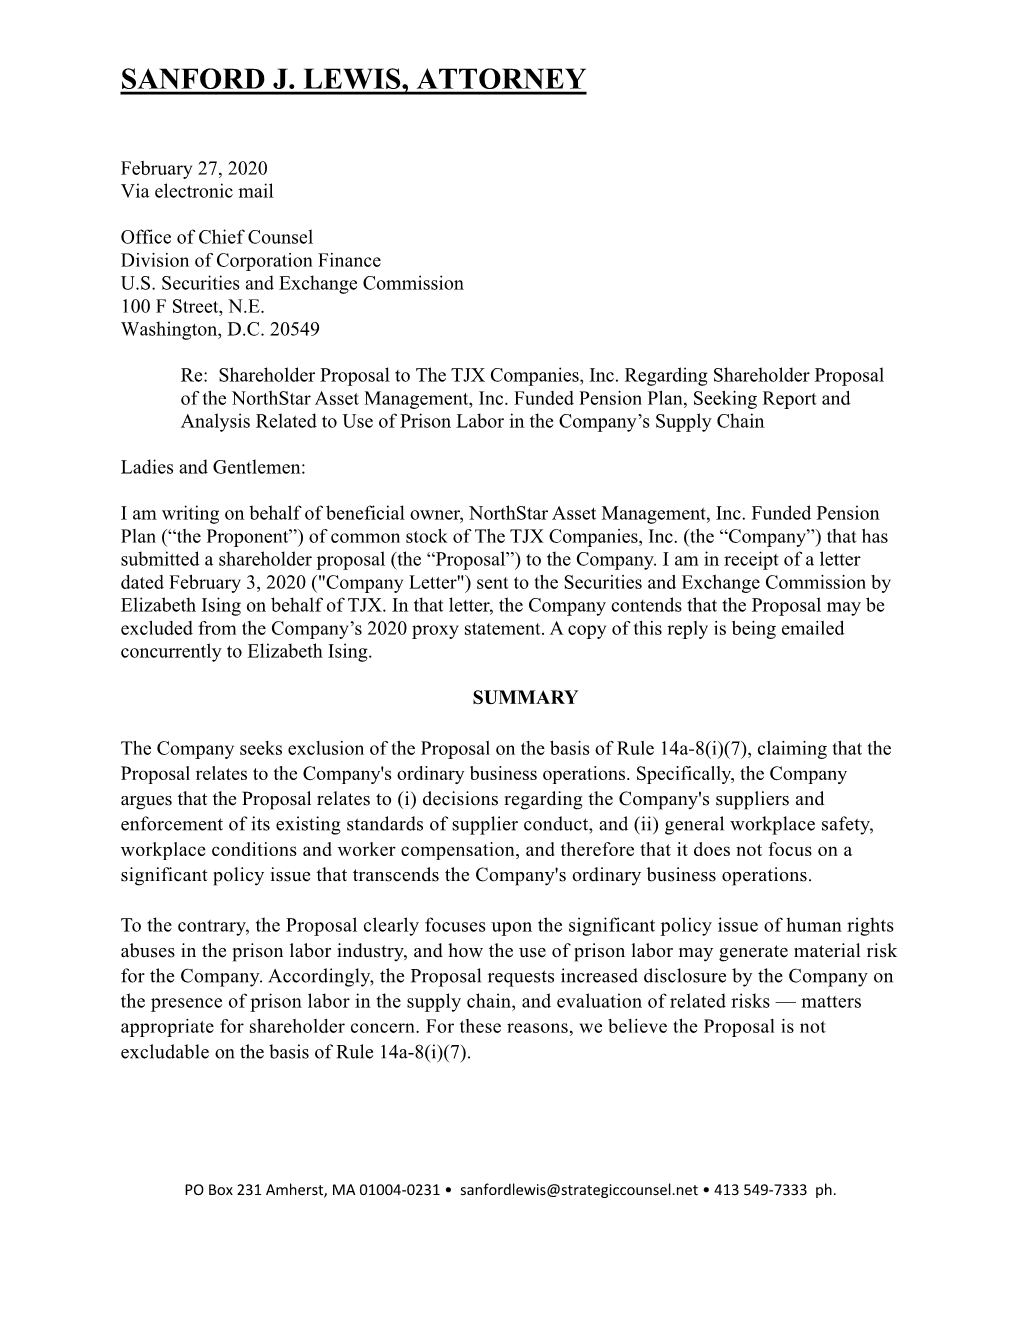 The TJX Companies, Inc. Regarding Shareholder Proposal of the Northstar Asset Management, Inc